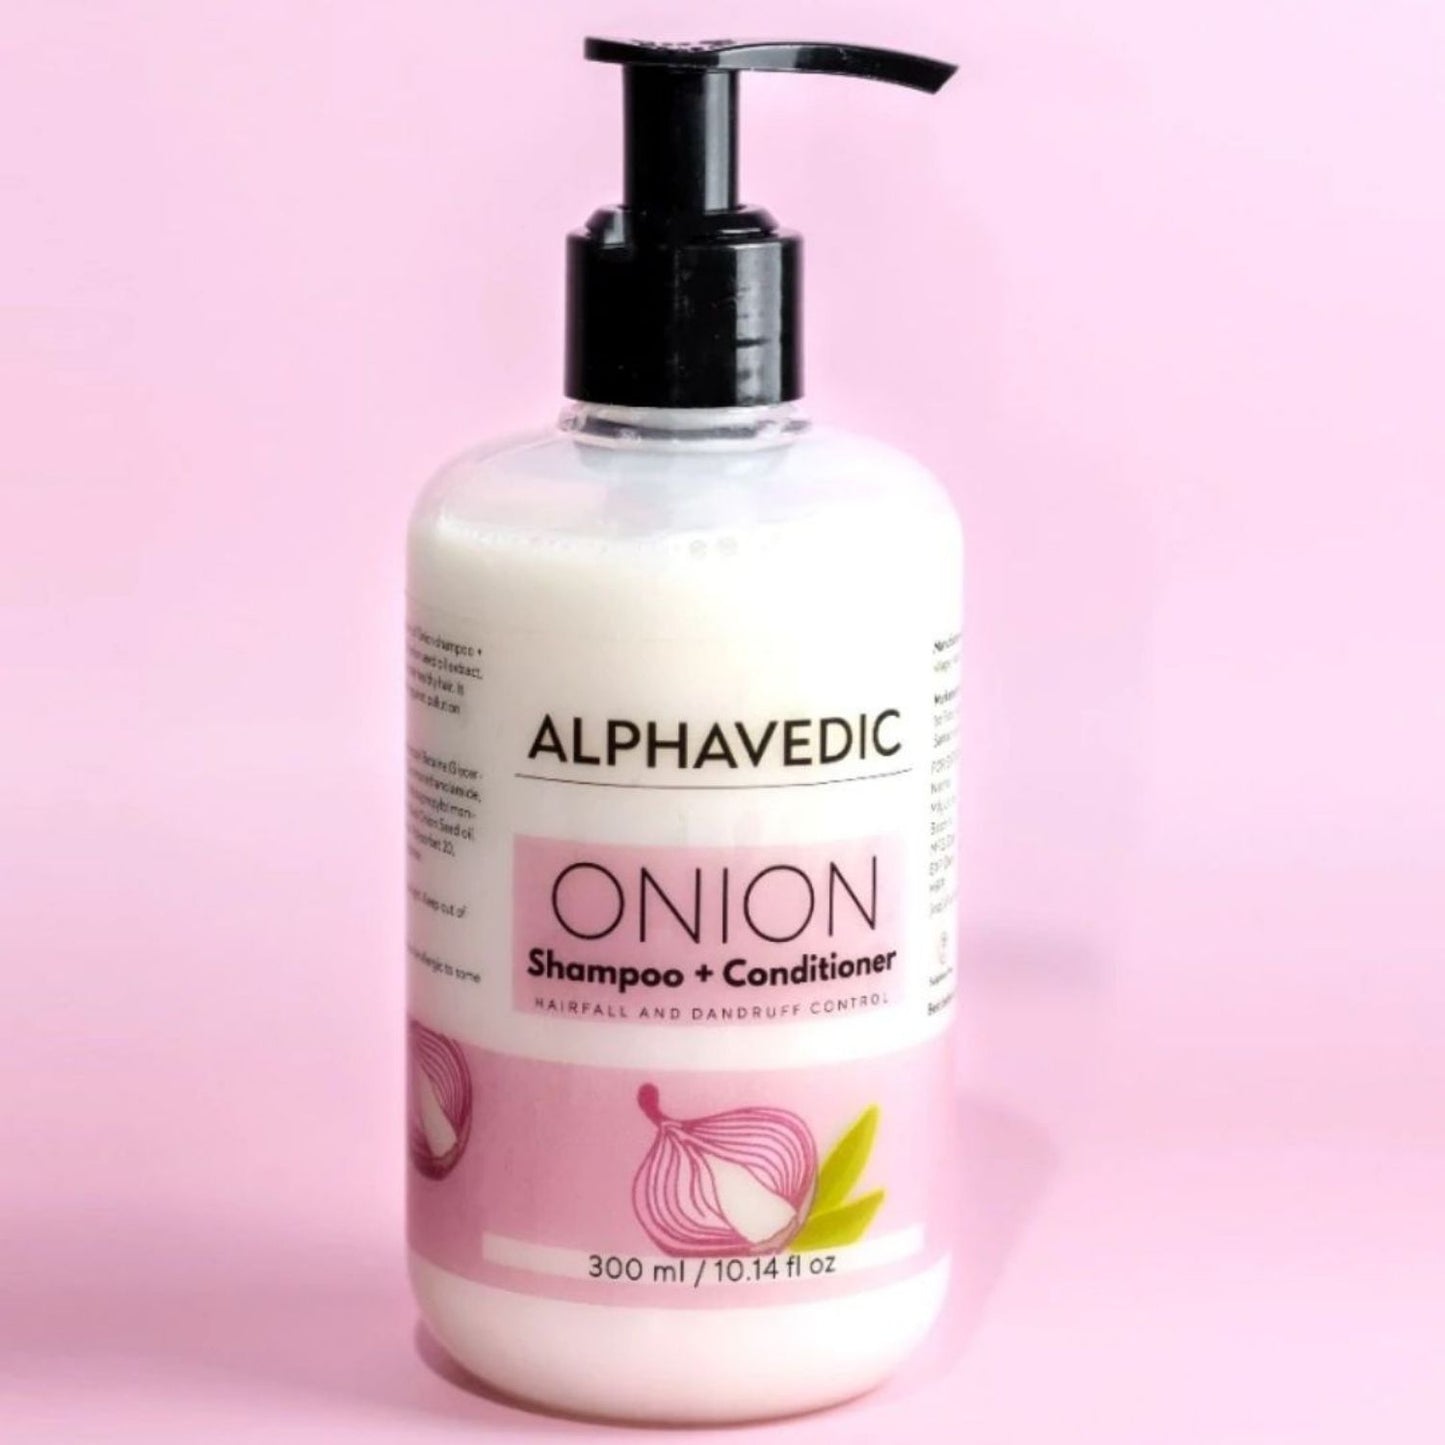 Hair Fall Control Onion Shampoo + Conditioner